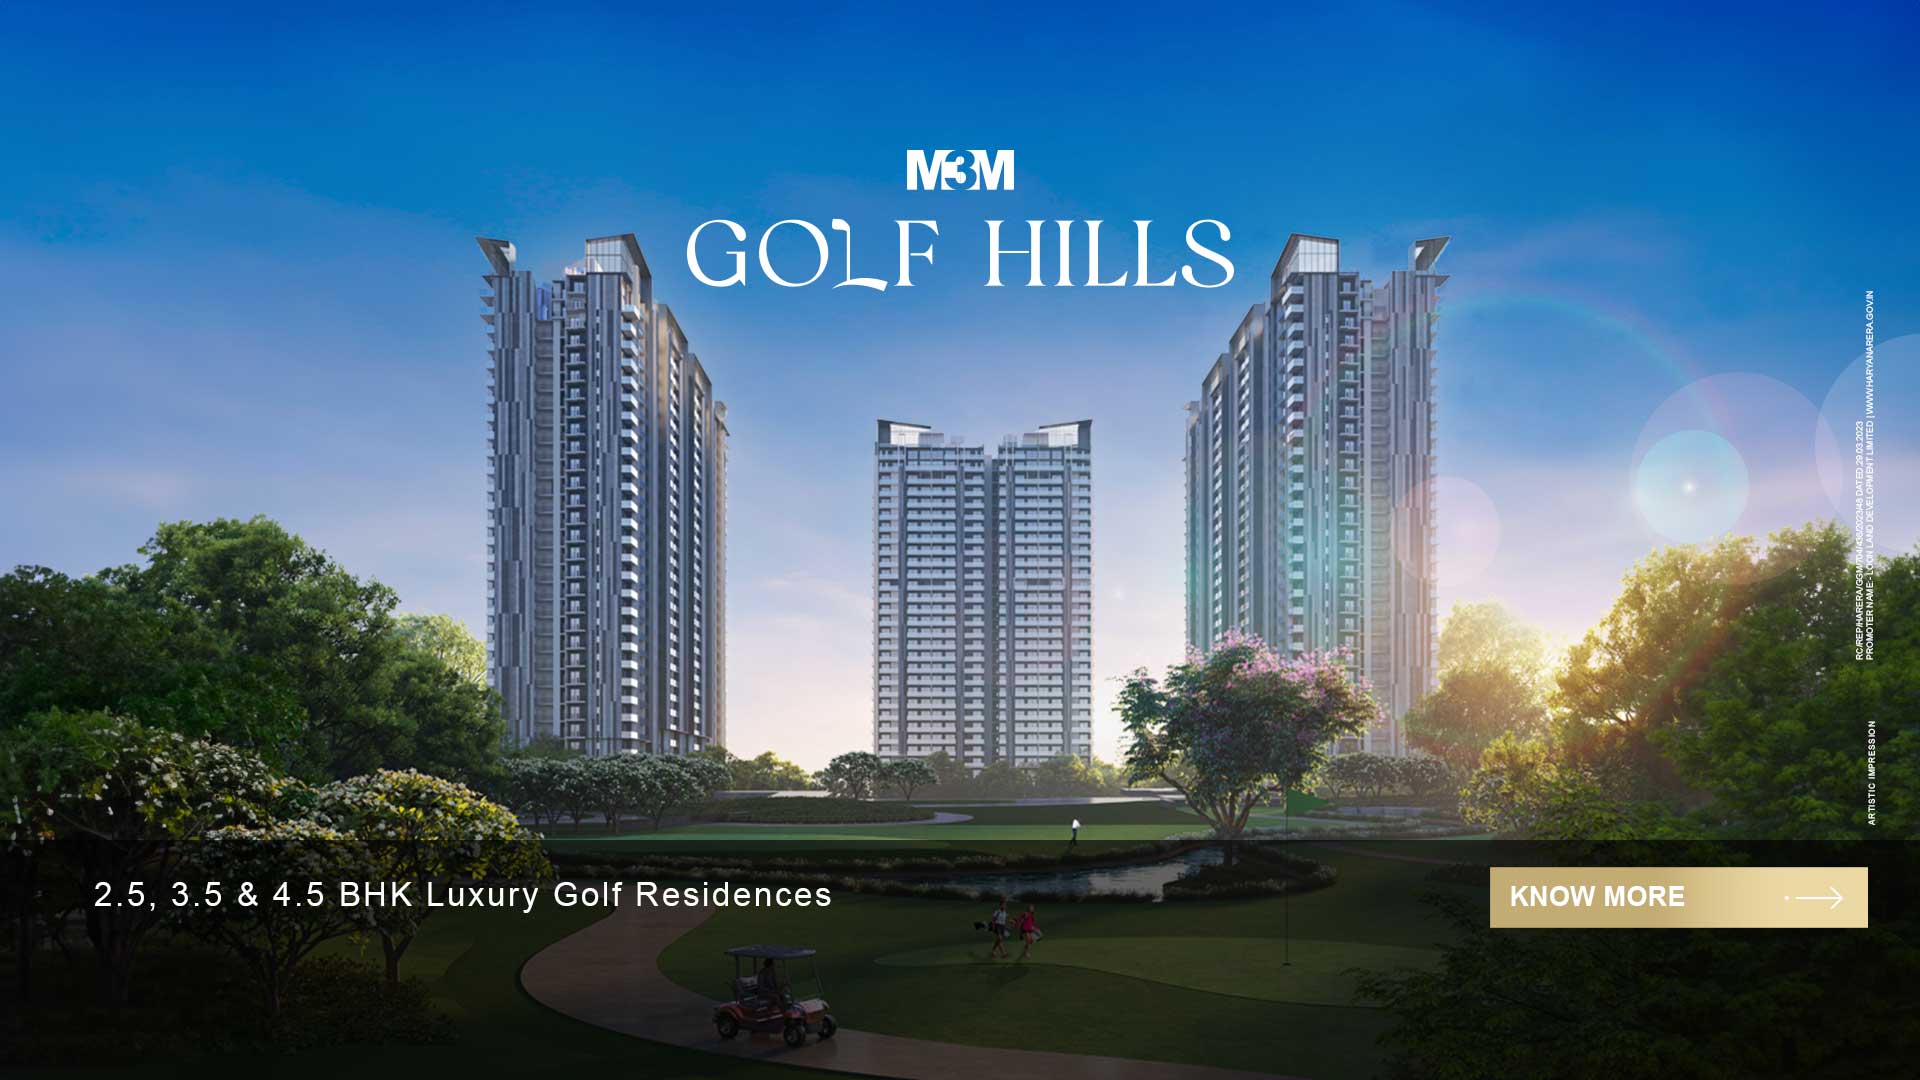 m3m golf hills sector 79 gurgaon